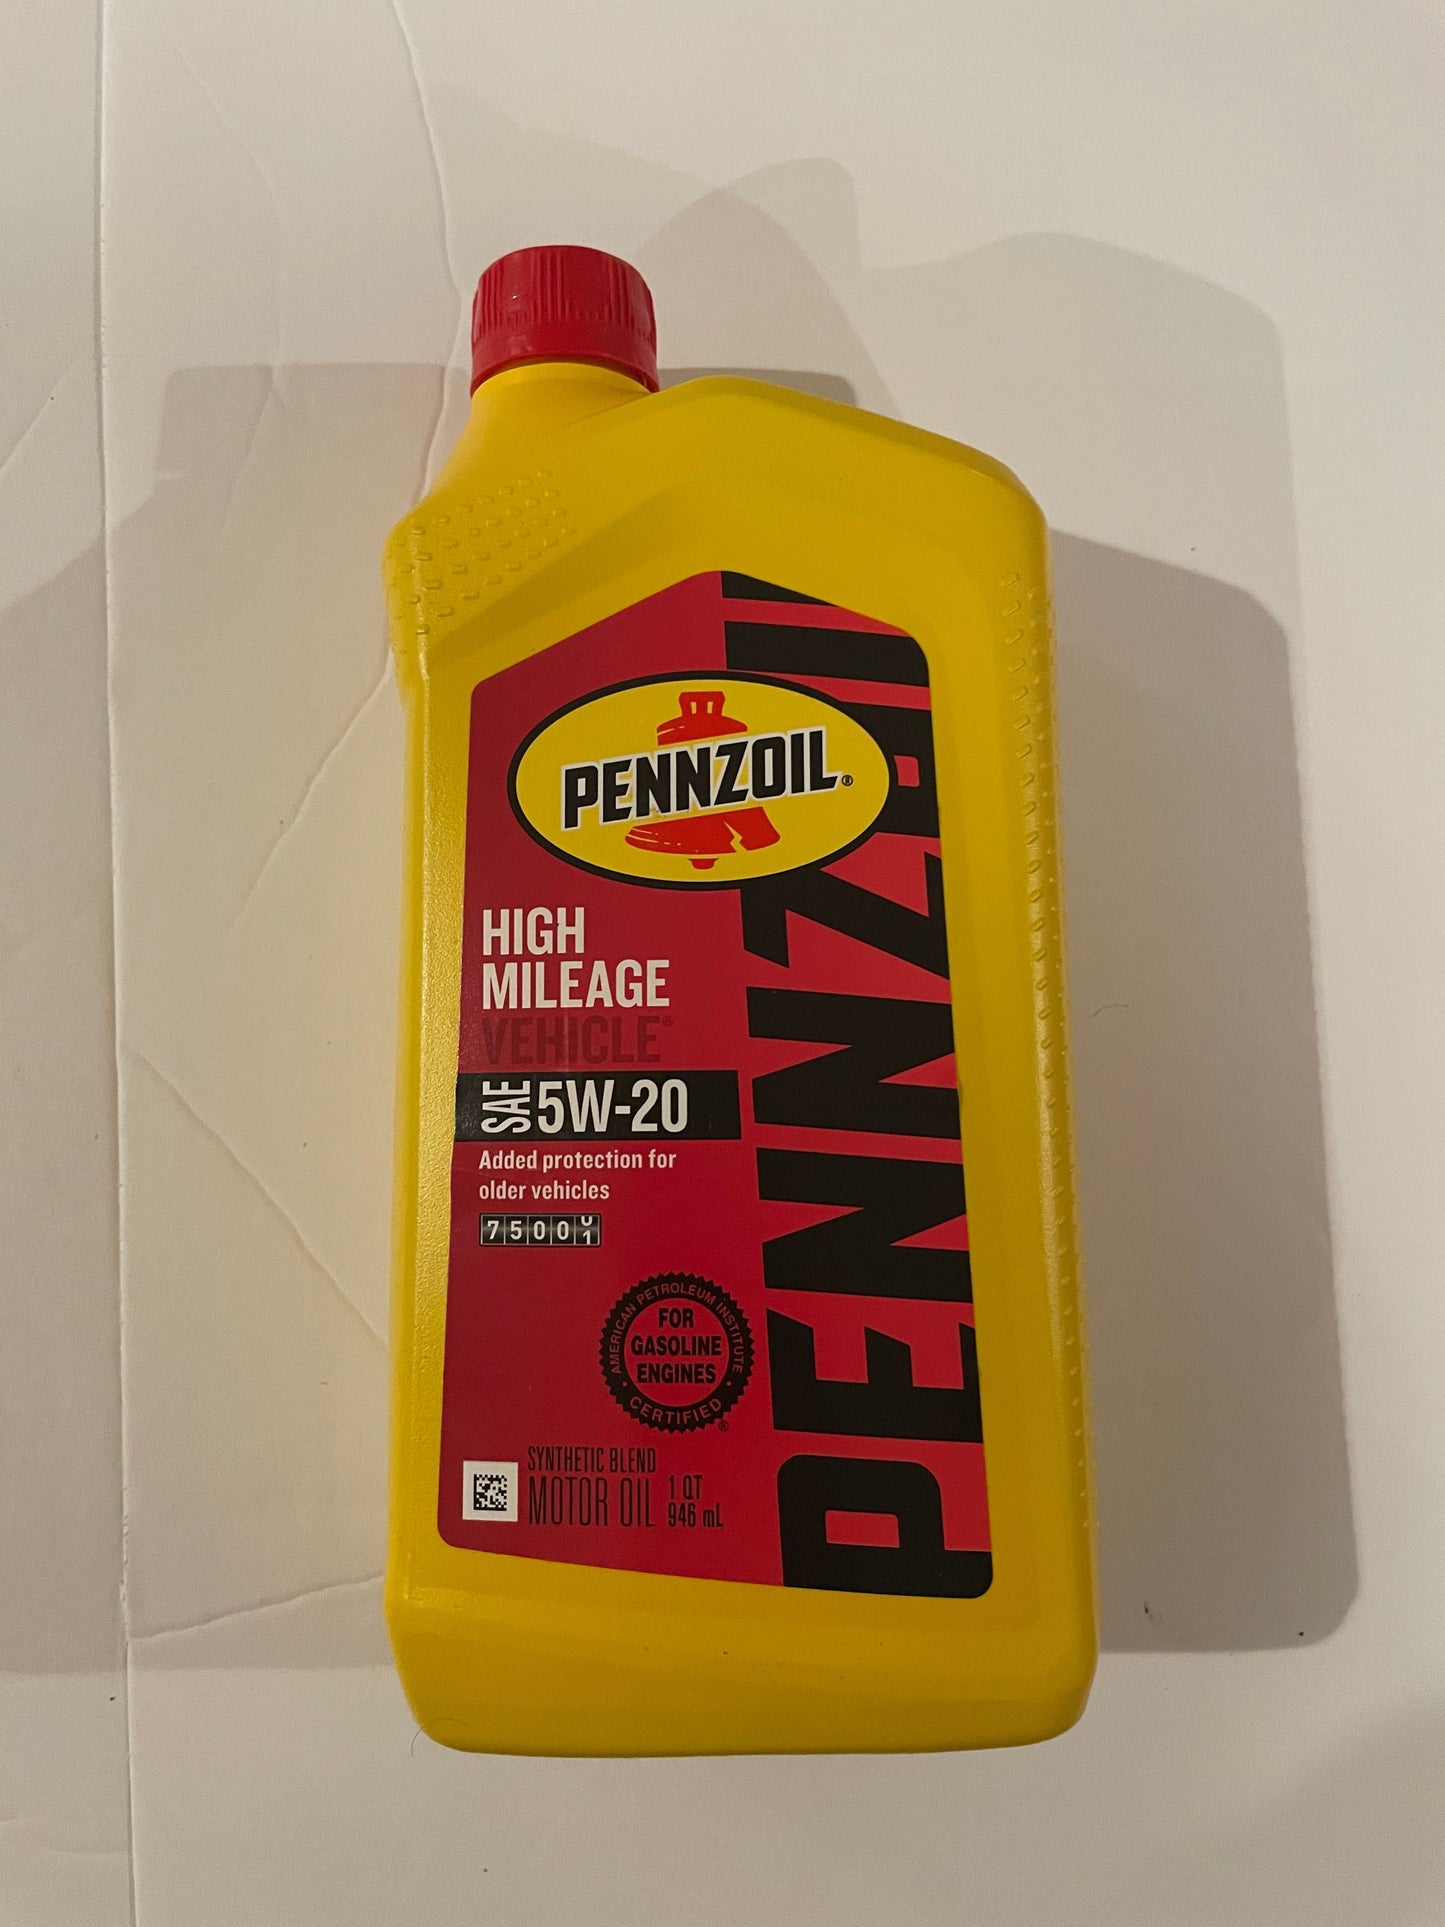 Pennzoil High Mileage Motor Oil